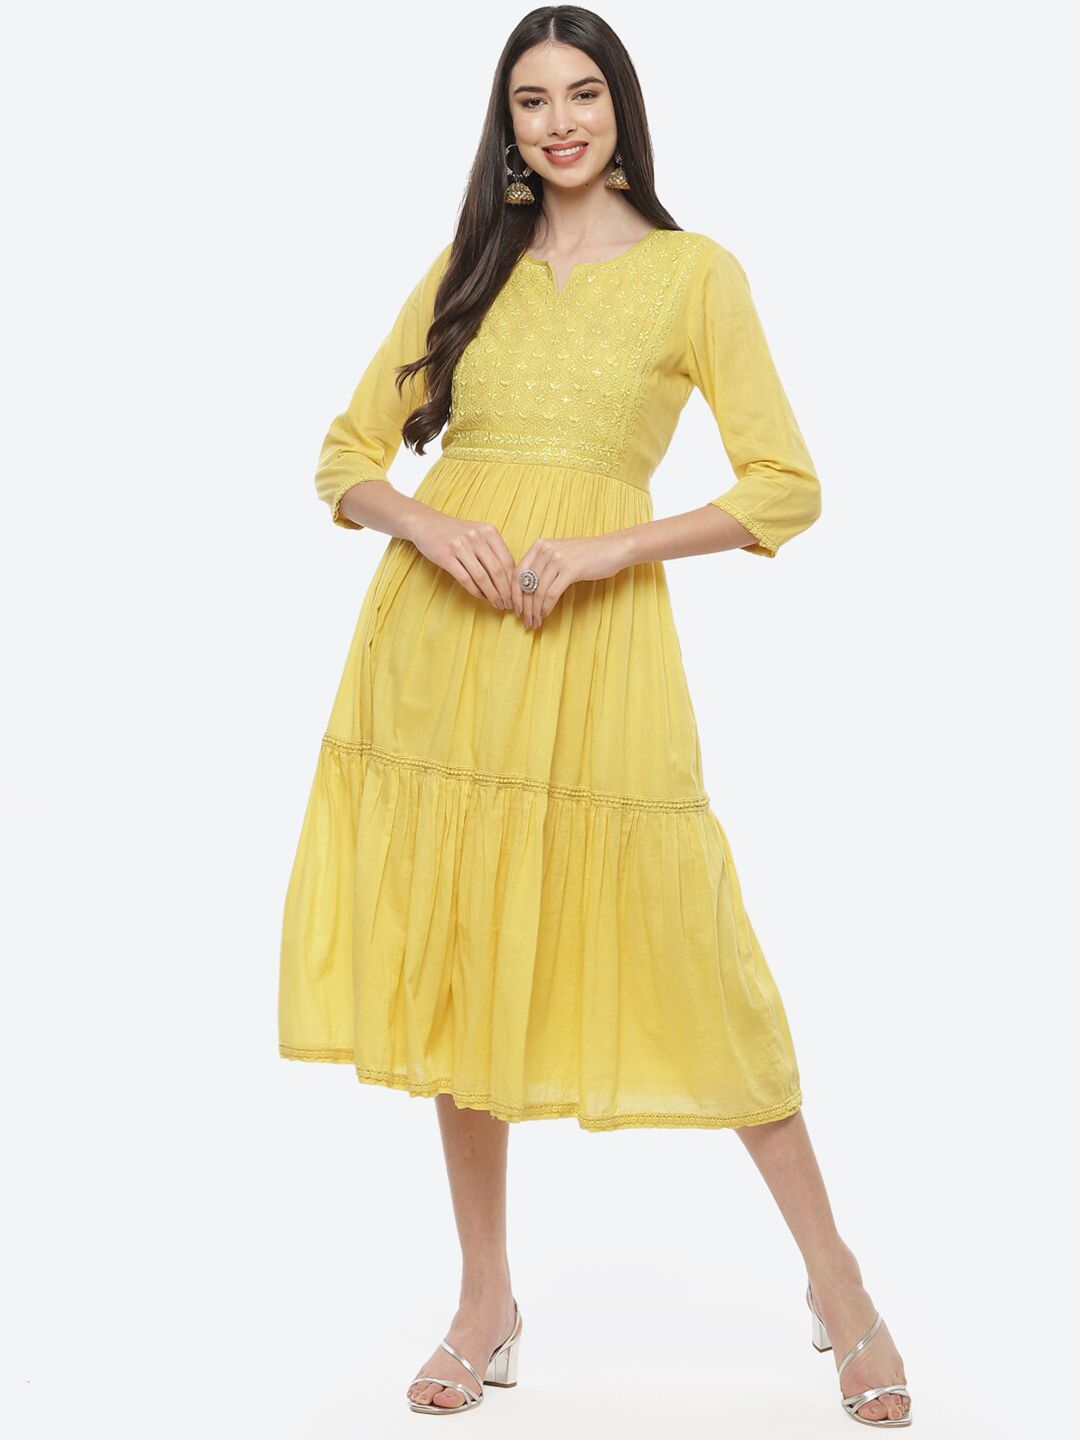 Biba Yellow Floral Embroidered Ethnic Midi Dress Price in India